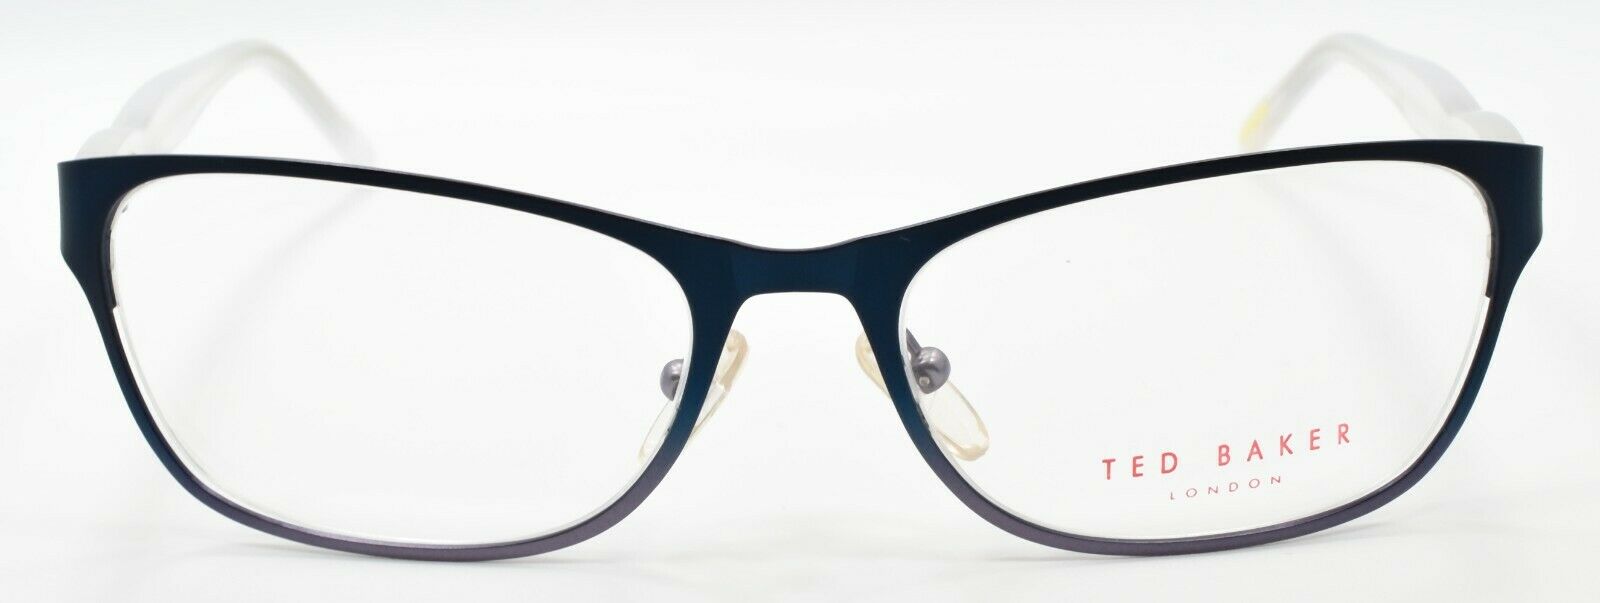 2-Ted Baker Rigger 2213 696 Women's Eyeglasses Frames 51-17-135 Navy / Light Blue-4894327075843-IKSpecs